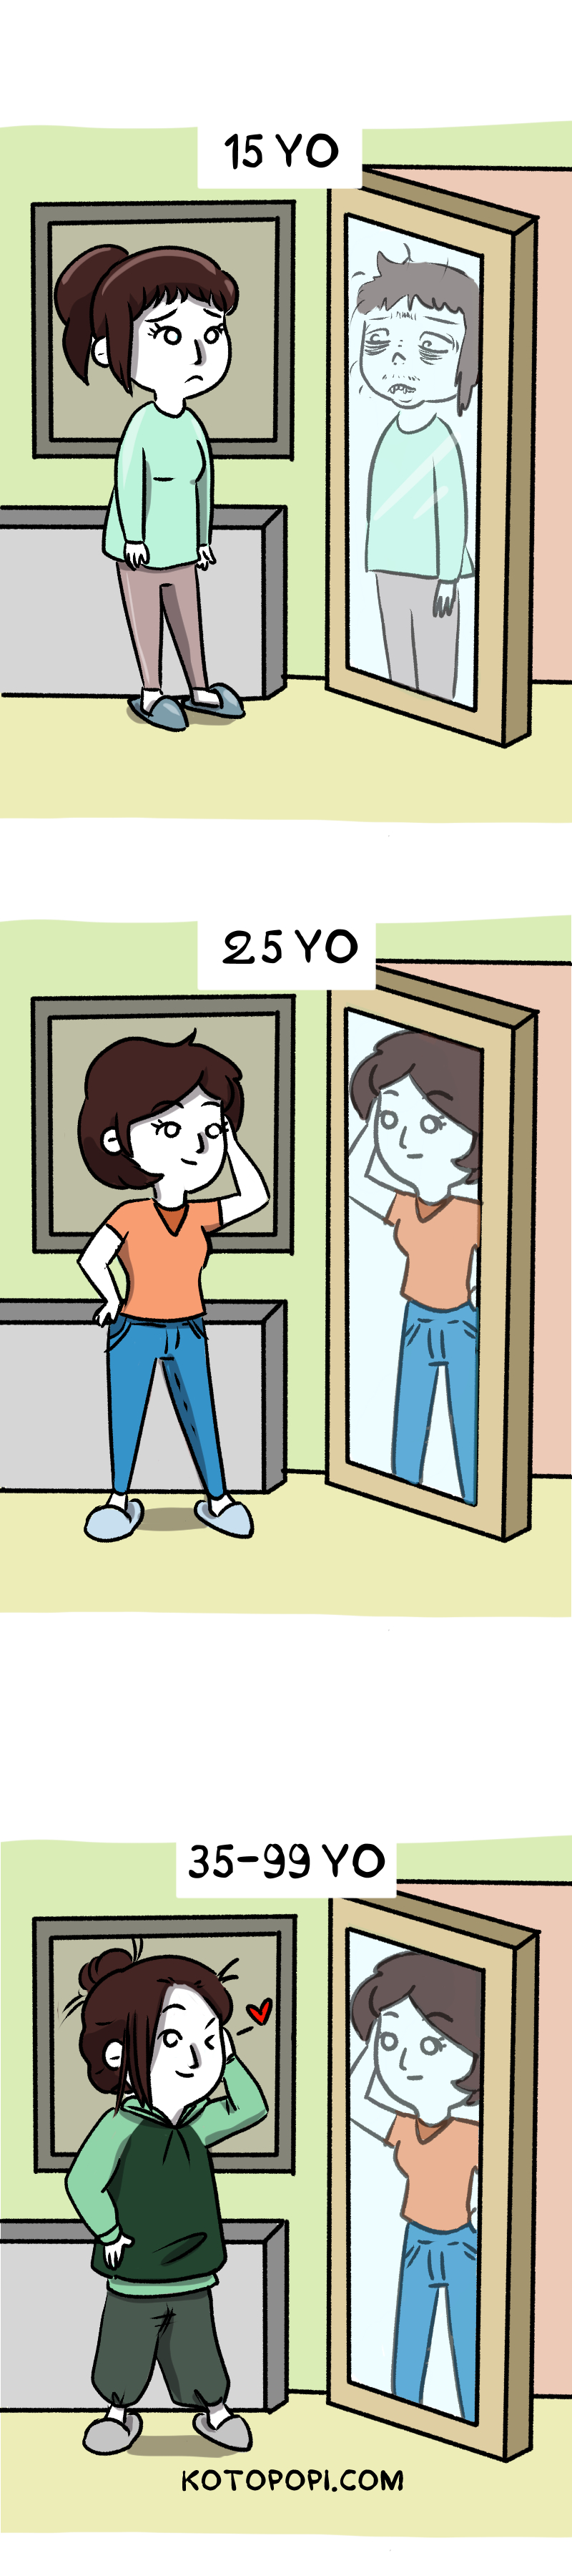 comic webcomic meme about self acceptance body image self awareness